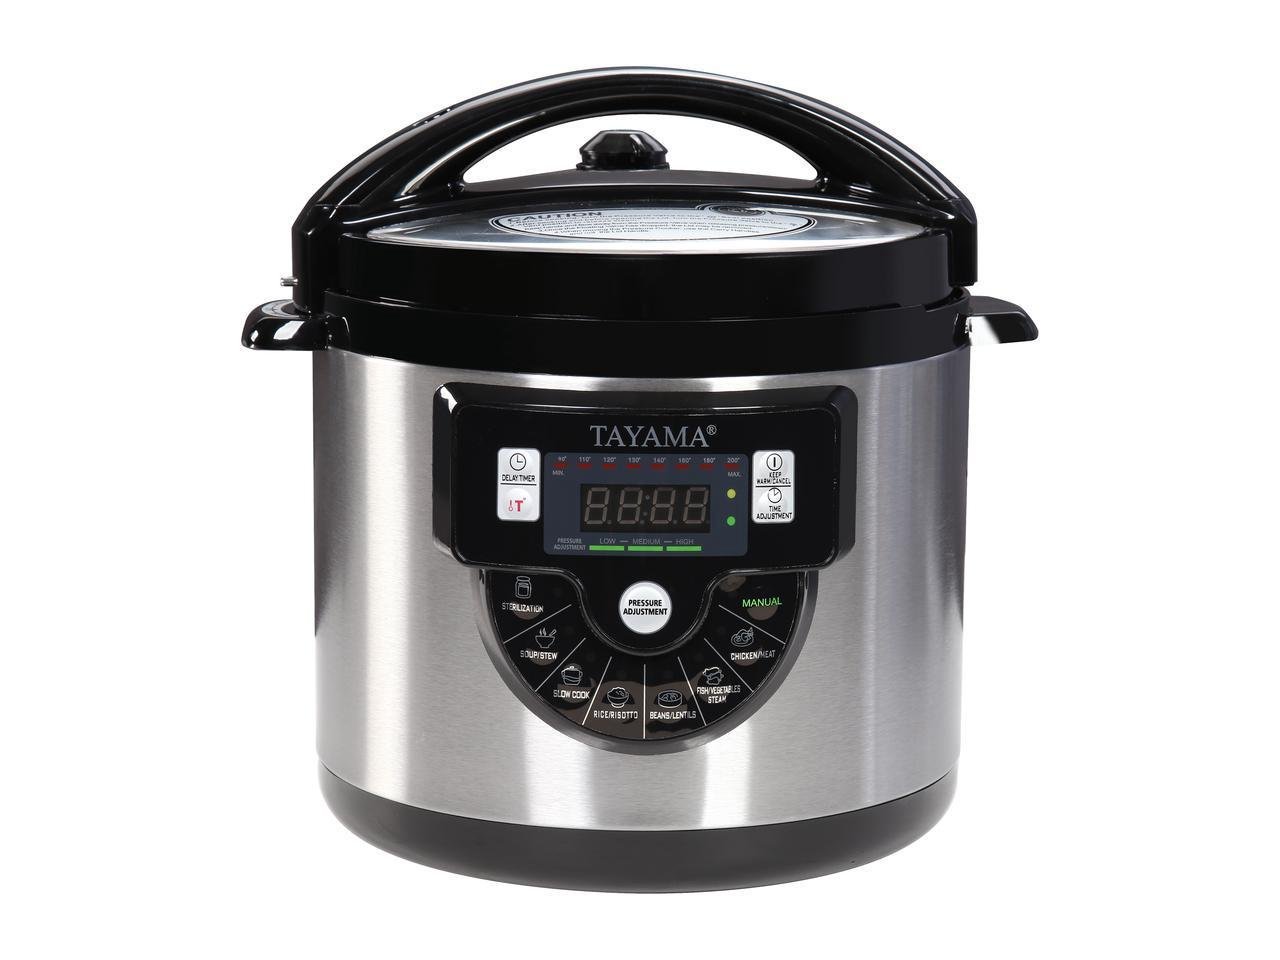 Price drop! Tayama 6-quart 8-in-1 multi-function pressure cooker for $35